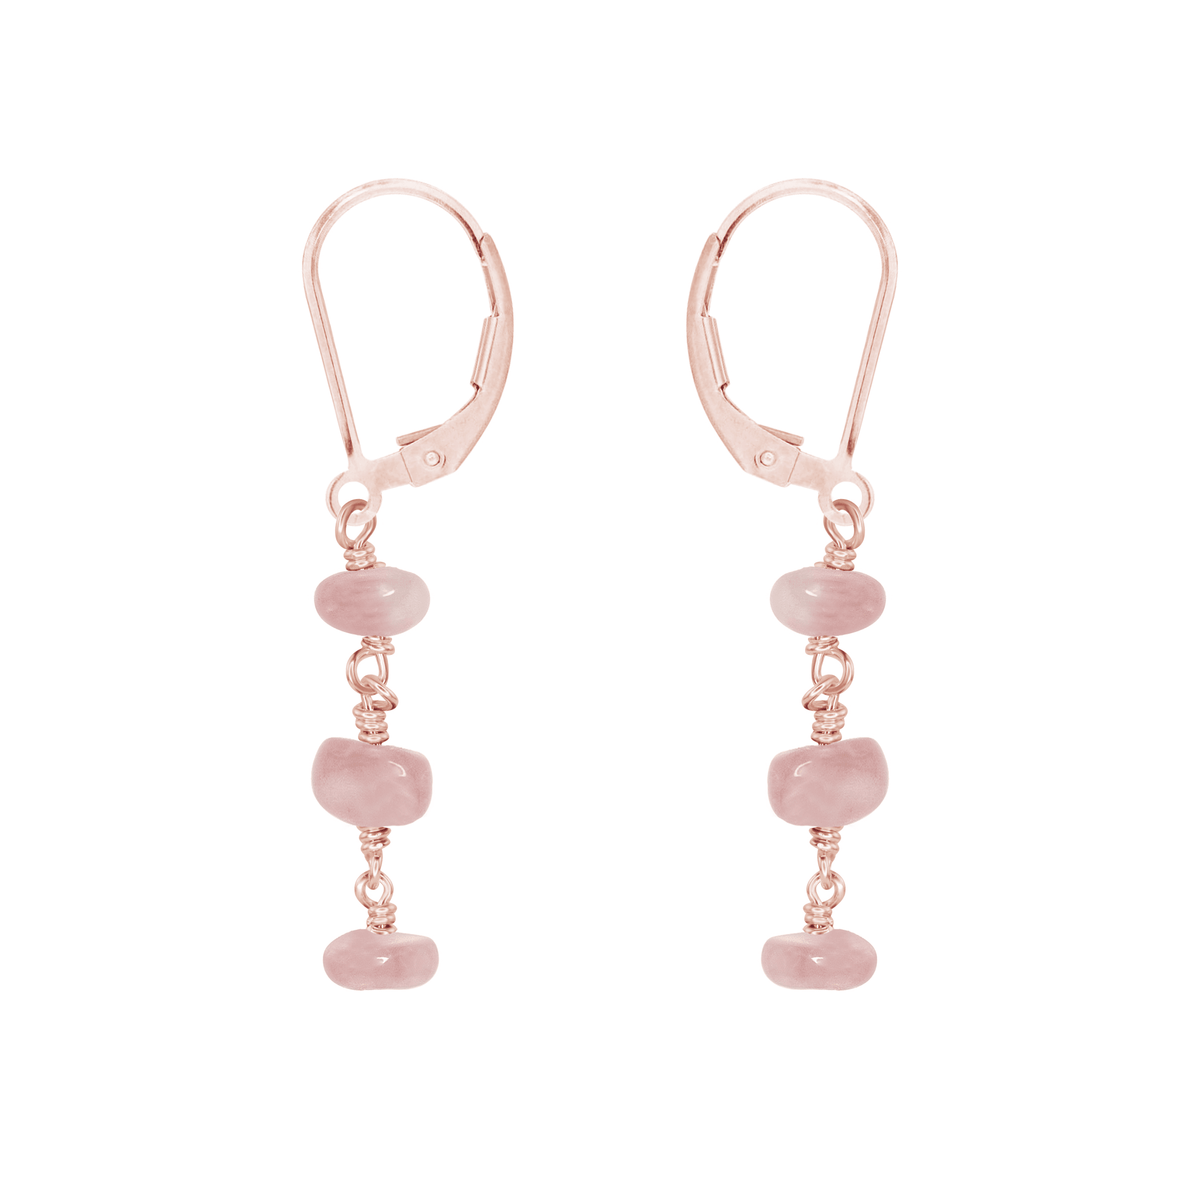 Rose Quartz Crystal Beaded Chain Dangle Leverback Earrings - Rose Quartz Crystal Beaded Chain Dangle Leverback Earrings - 14k Rose Gold Fill - Luna Tide Handmade Crystal Jewellery